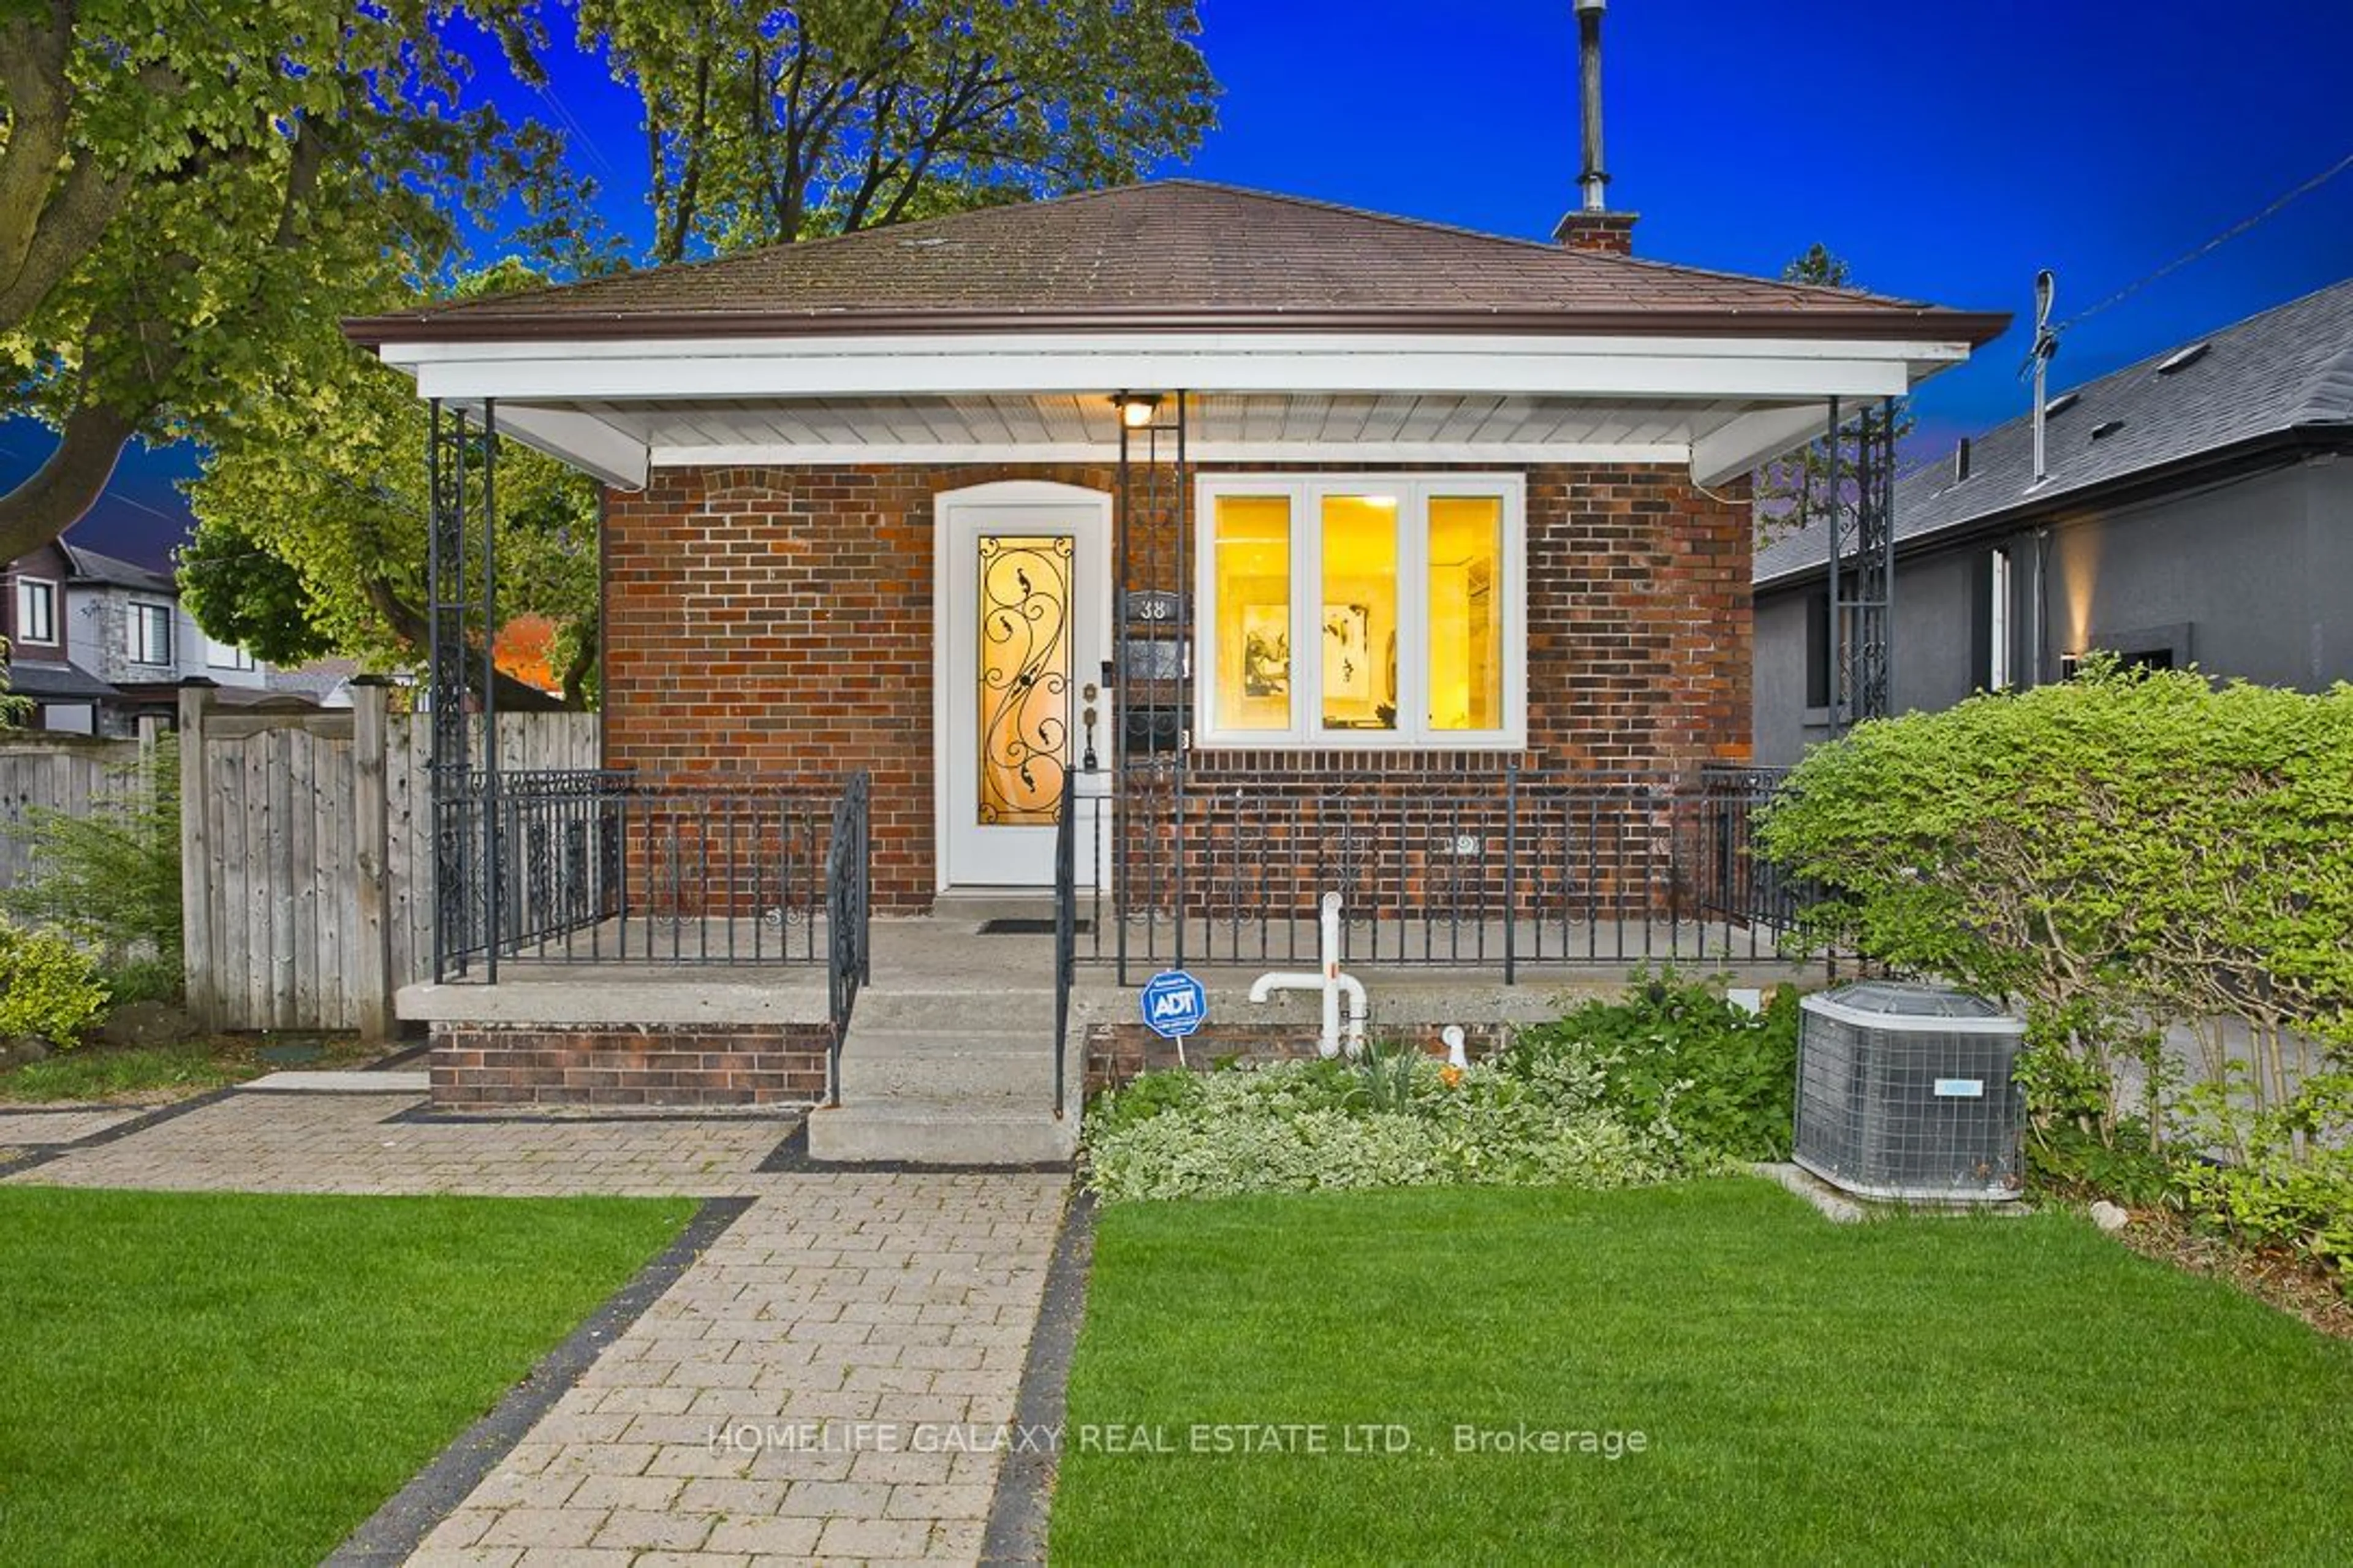 Home with brick exterior material for 38 Montcalm Ave, Toronto Ontario M6E 4N7